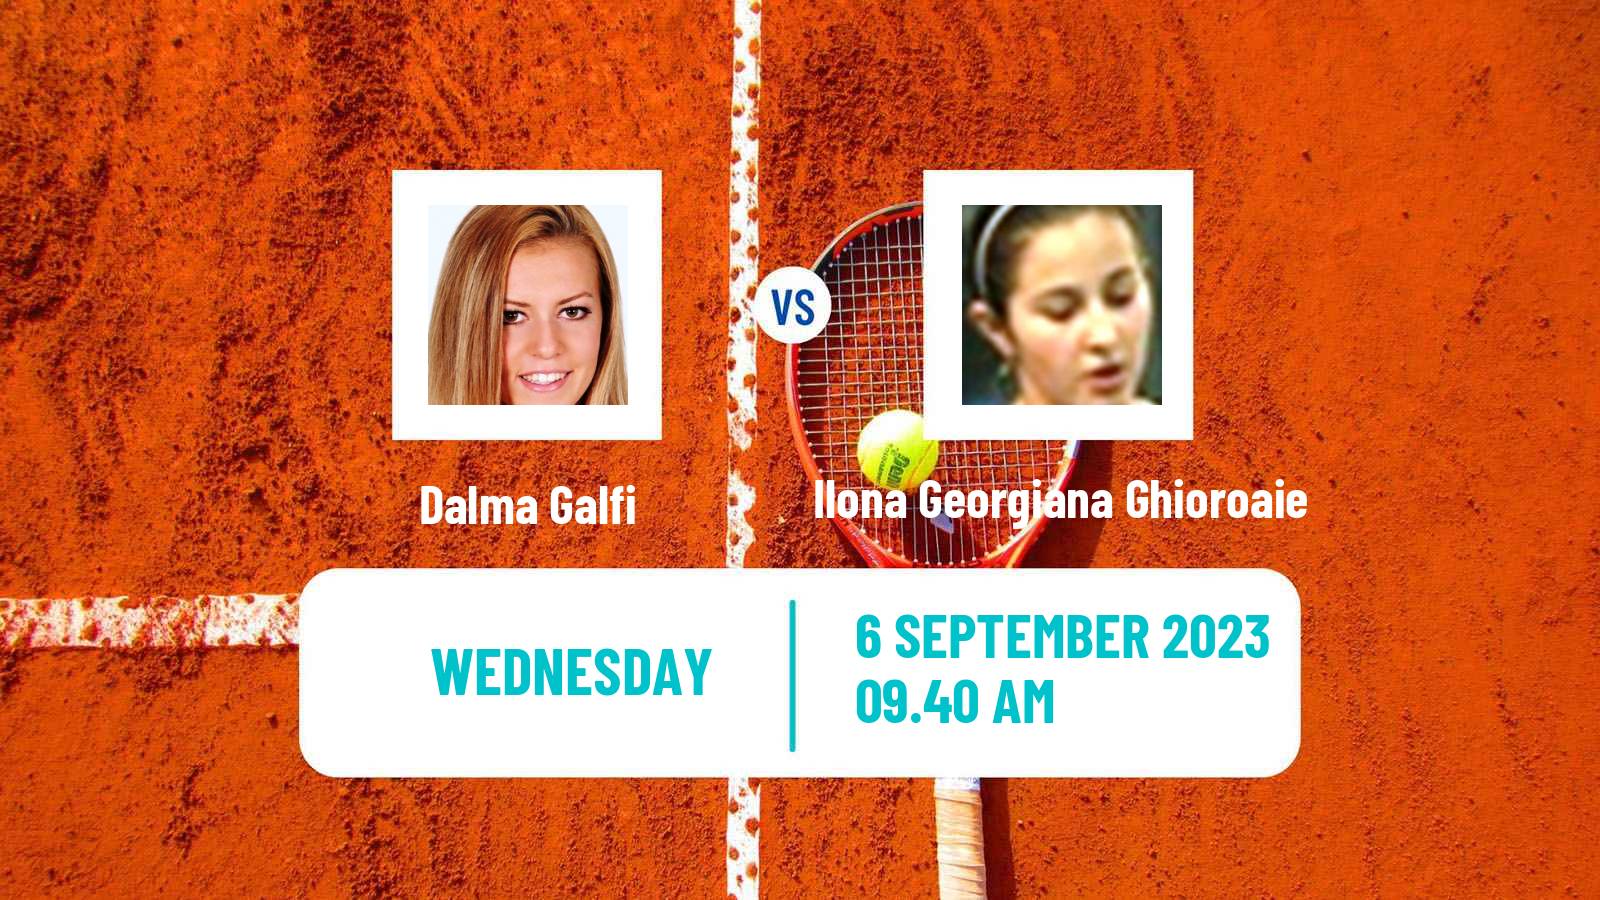 Tennis ITF W60 Vienna Women Dalma Galfi - Ilona Georgiana Ghioroaie